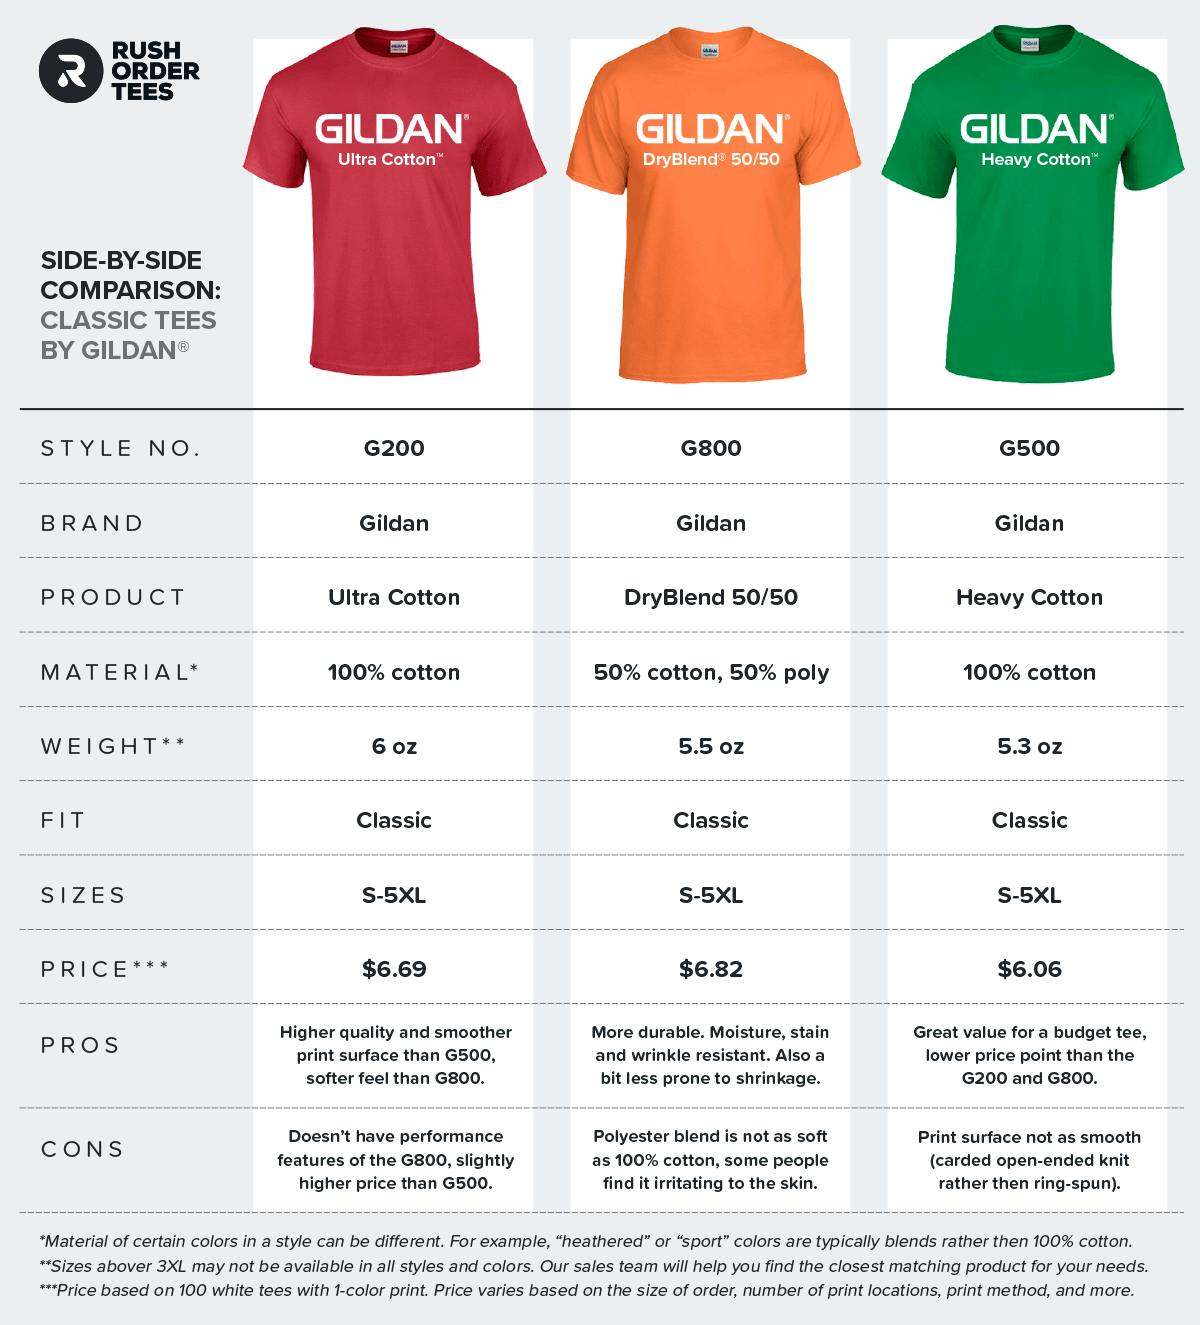 Comparison chart of Gildan classic tees: G200 vs G800 vs G500